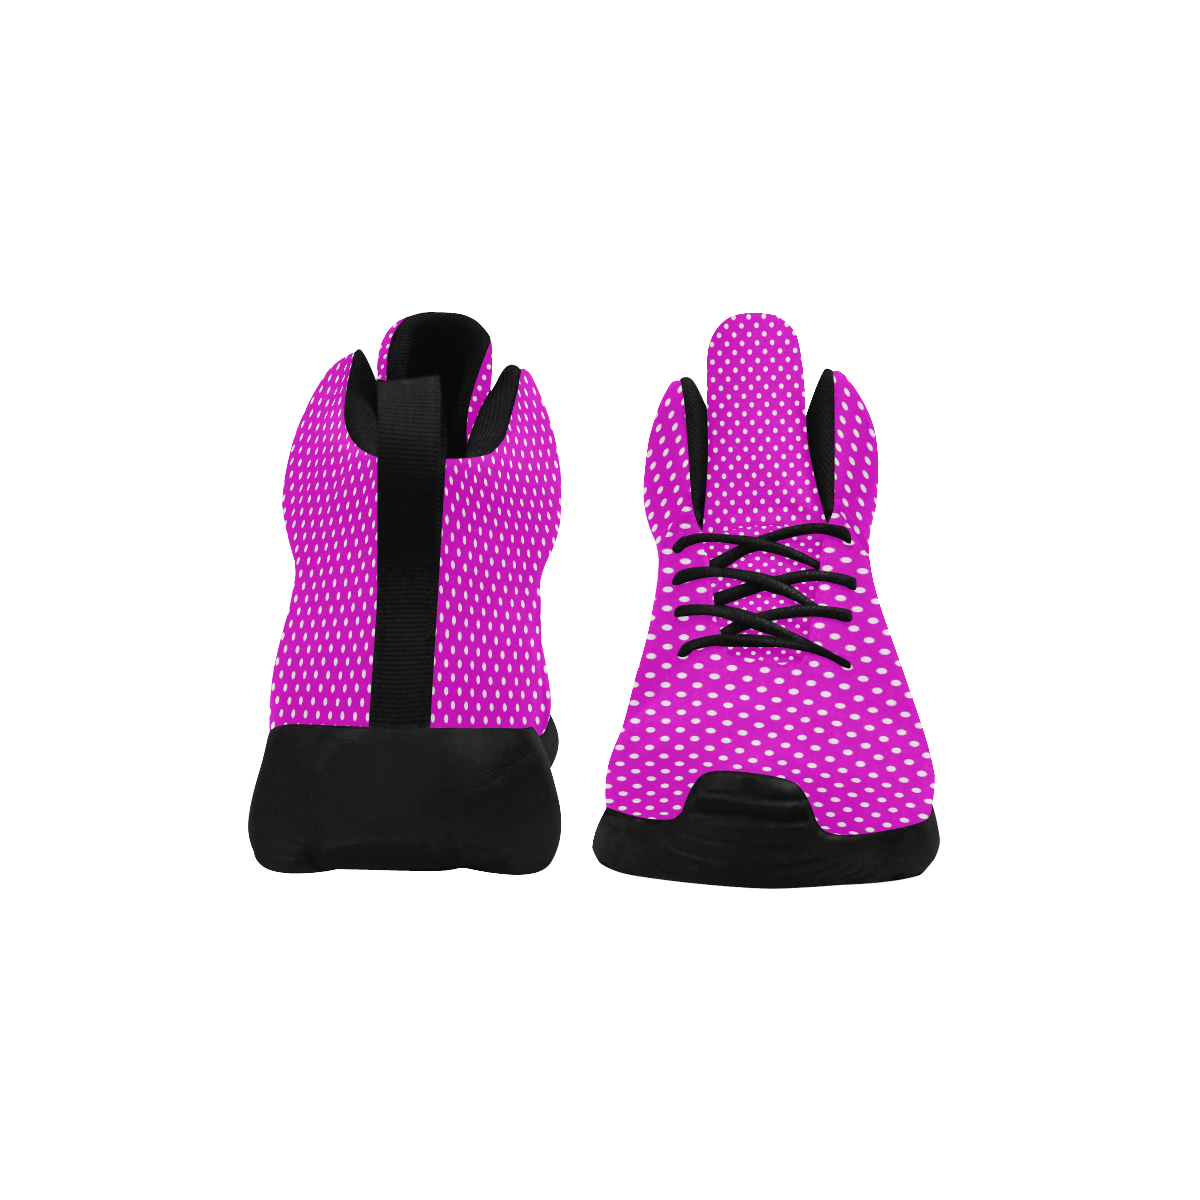 Pink polka dots Women's Chukka Training Shoes (Model 57502)